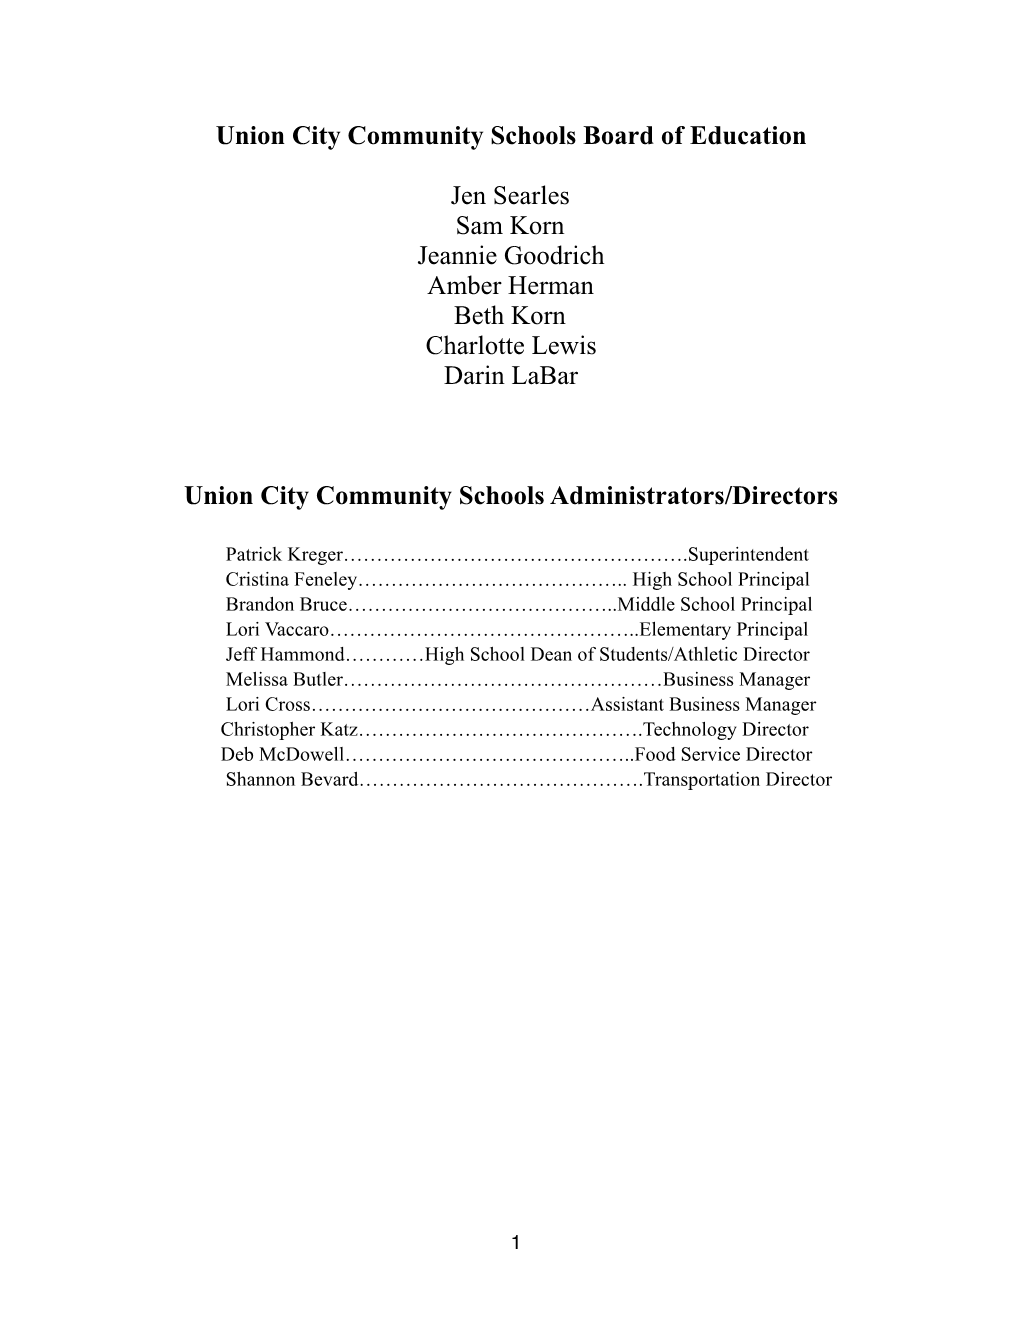 Union City Community Schools Board of Education Jen Searles Sam Korn